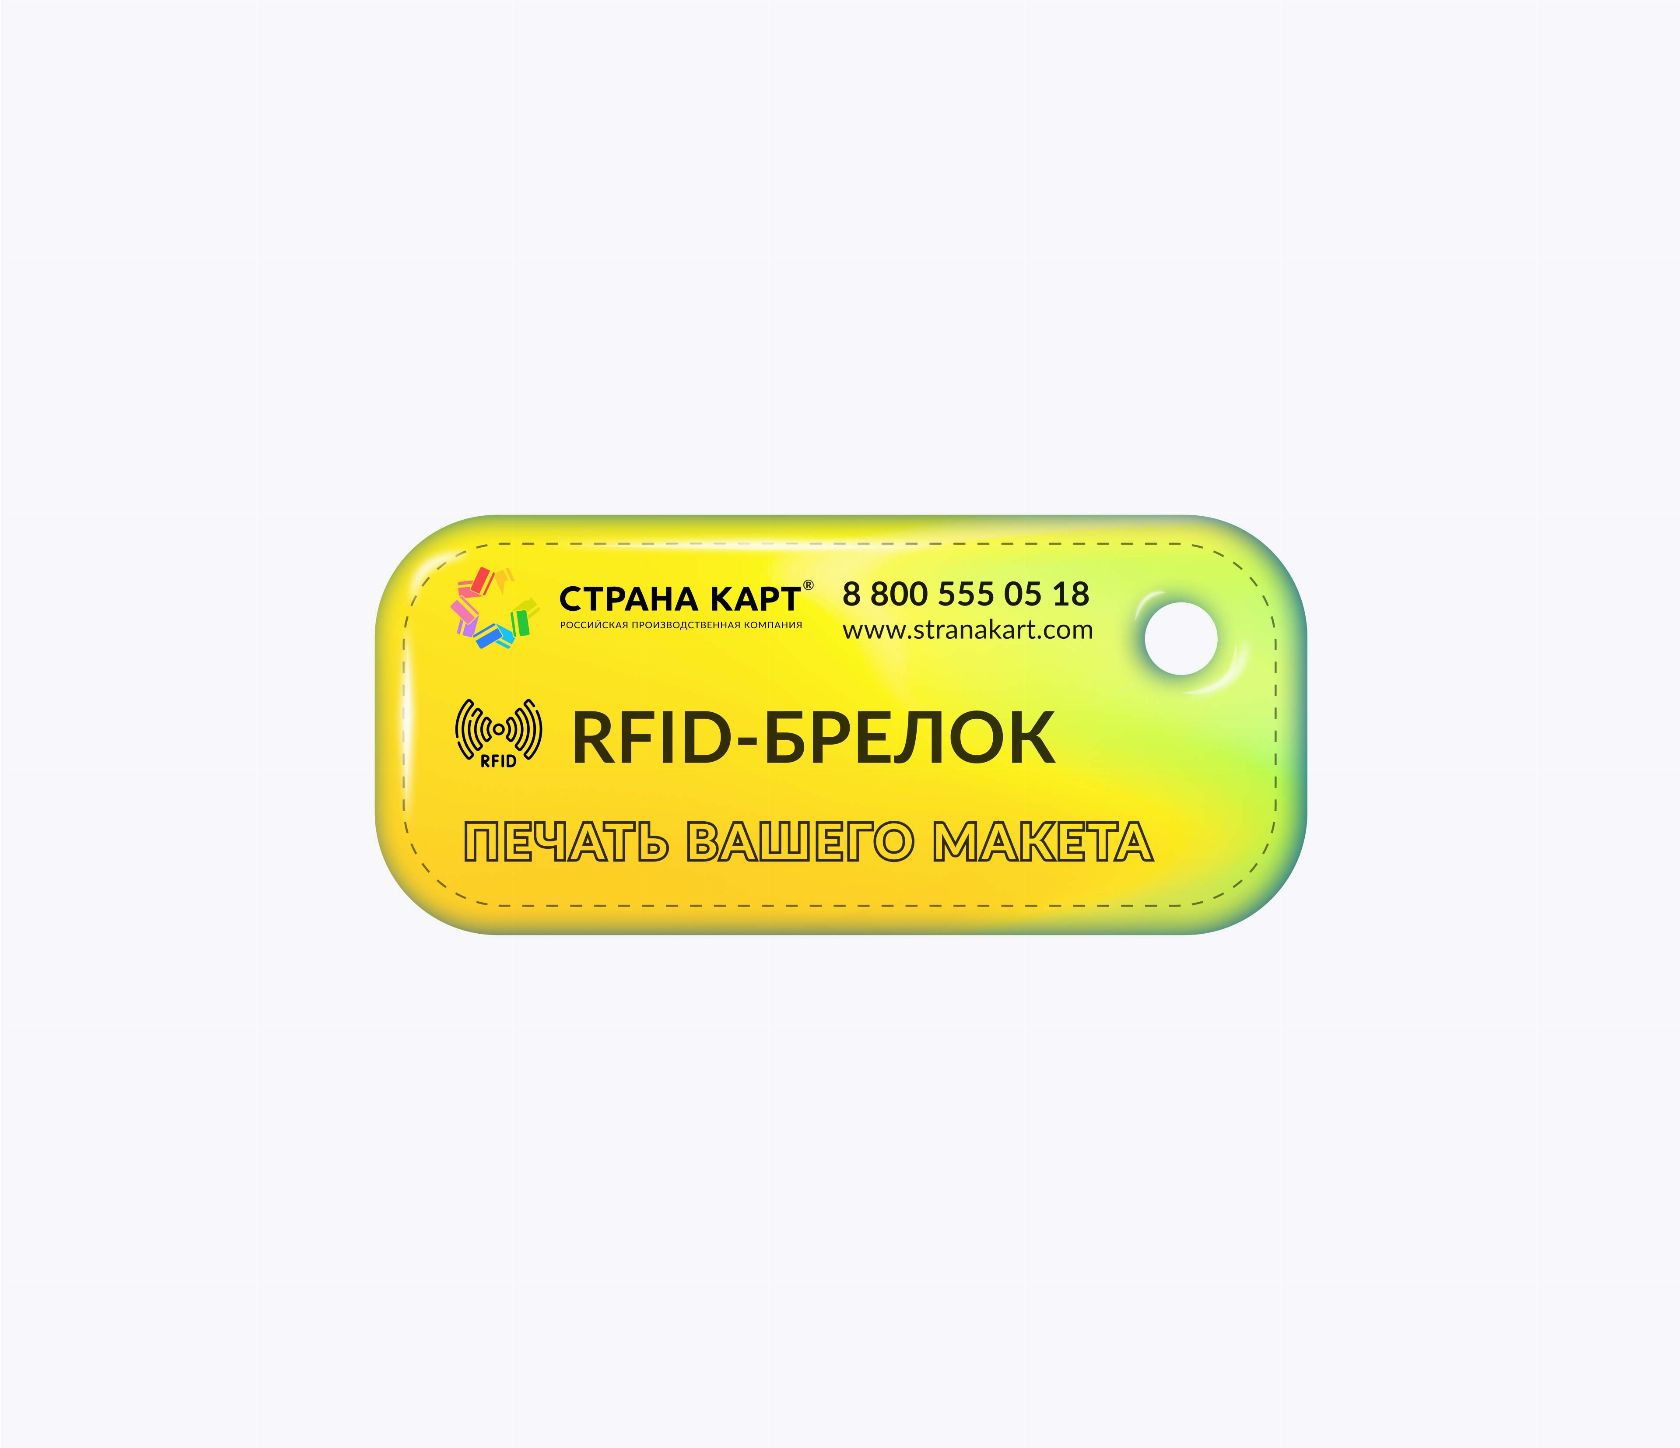 Прямоугольные мини RFID-брелоки NEOKEY® с чипом NXP MIFARE ID 4 byte nUID RFID-брелоки NEOKEY® с чипом NXP MIFARE ID 4 byte nUID и вашим логотипом